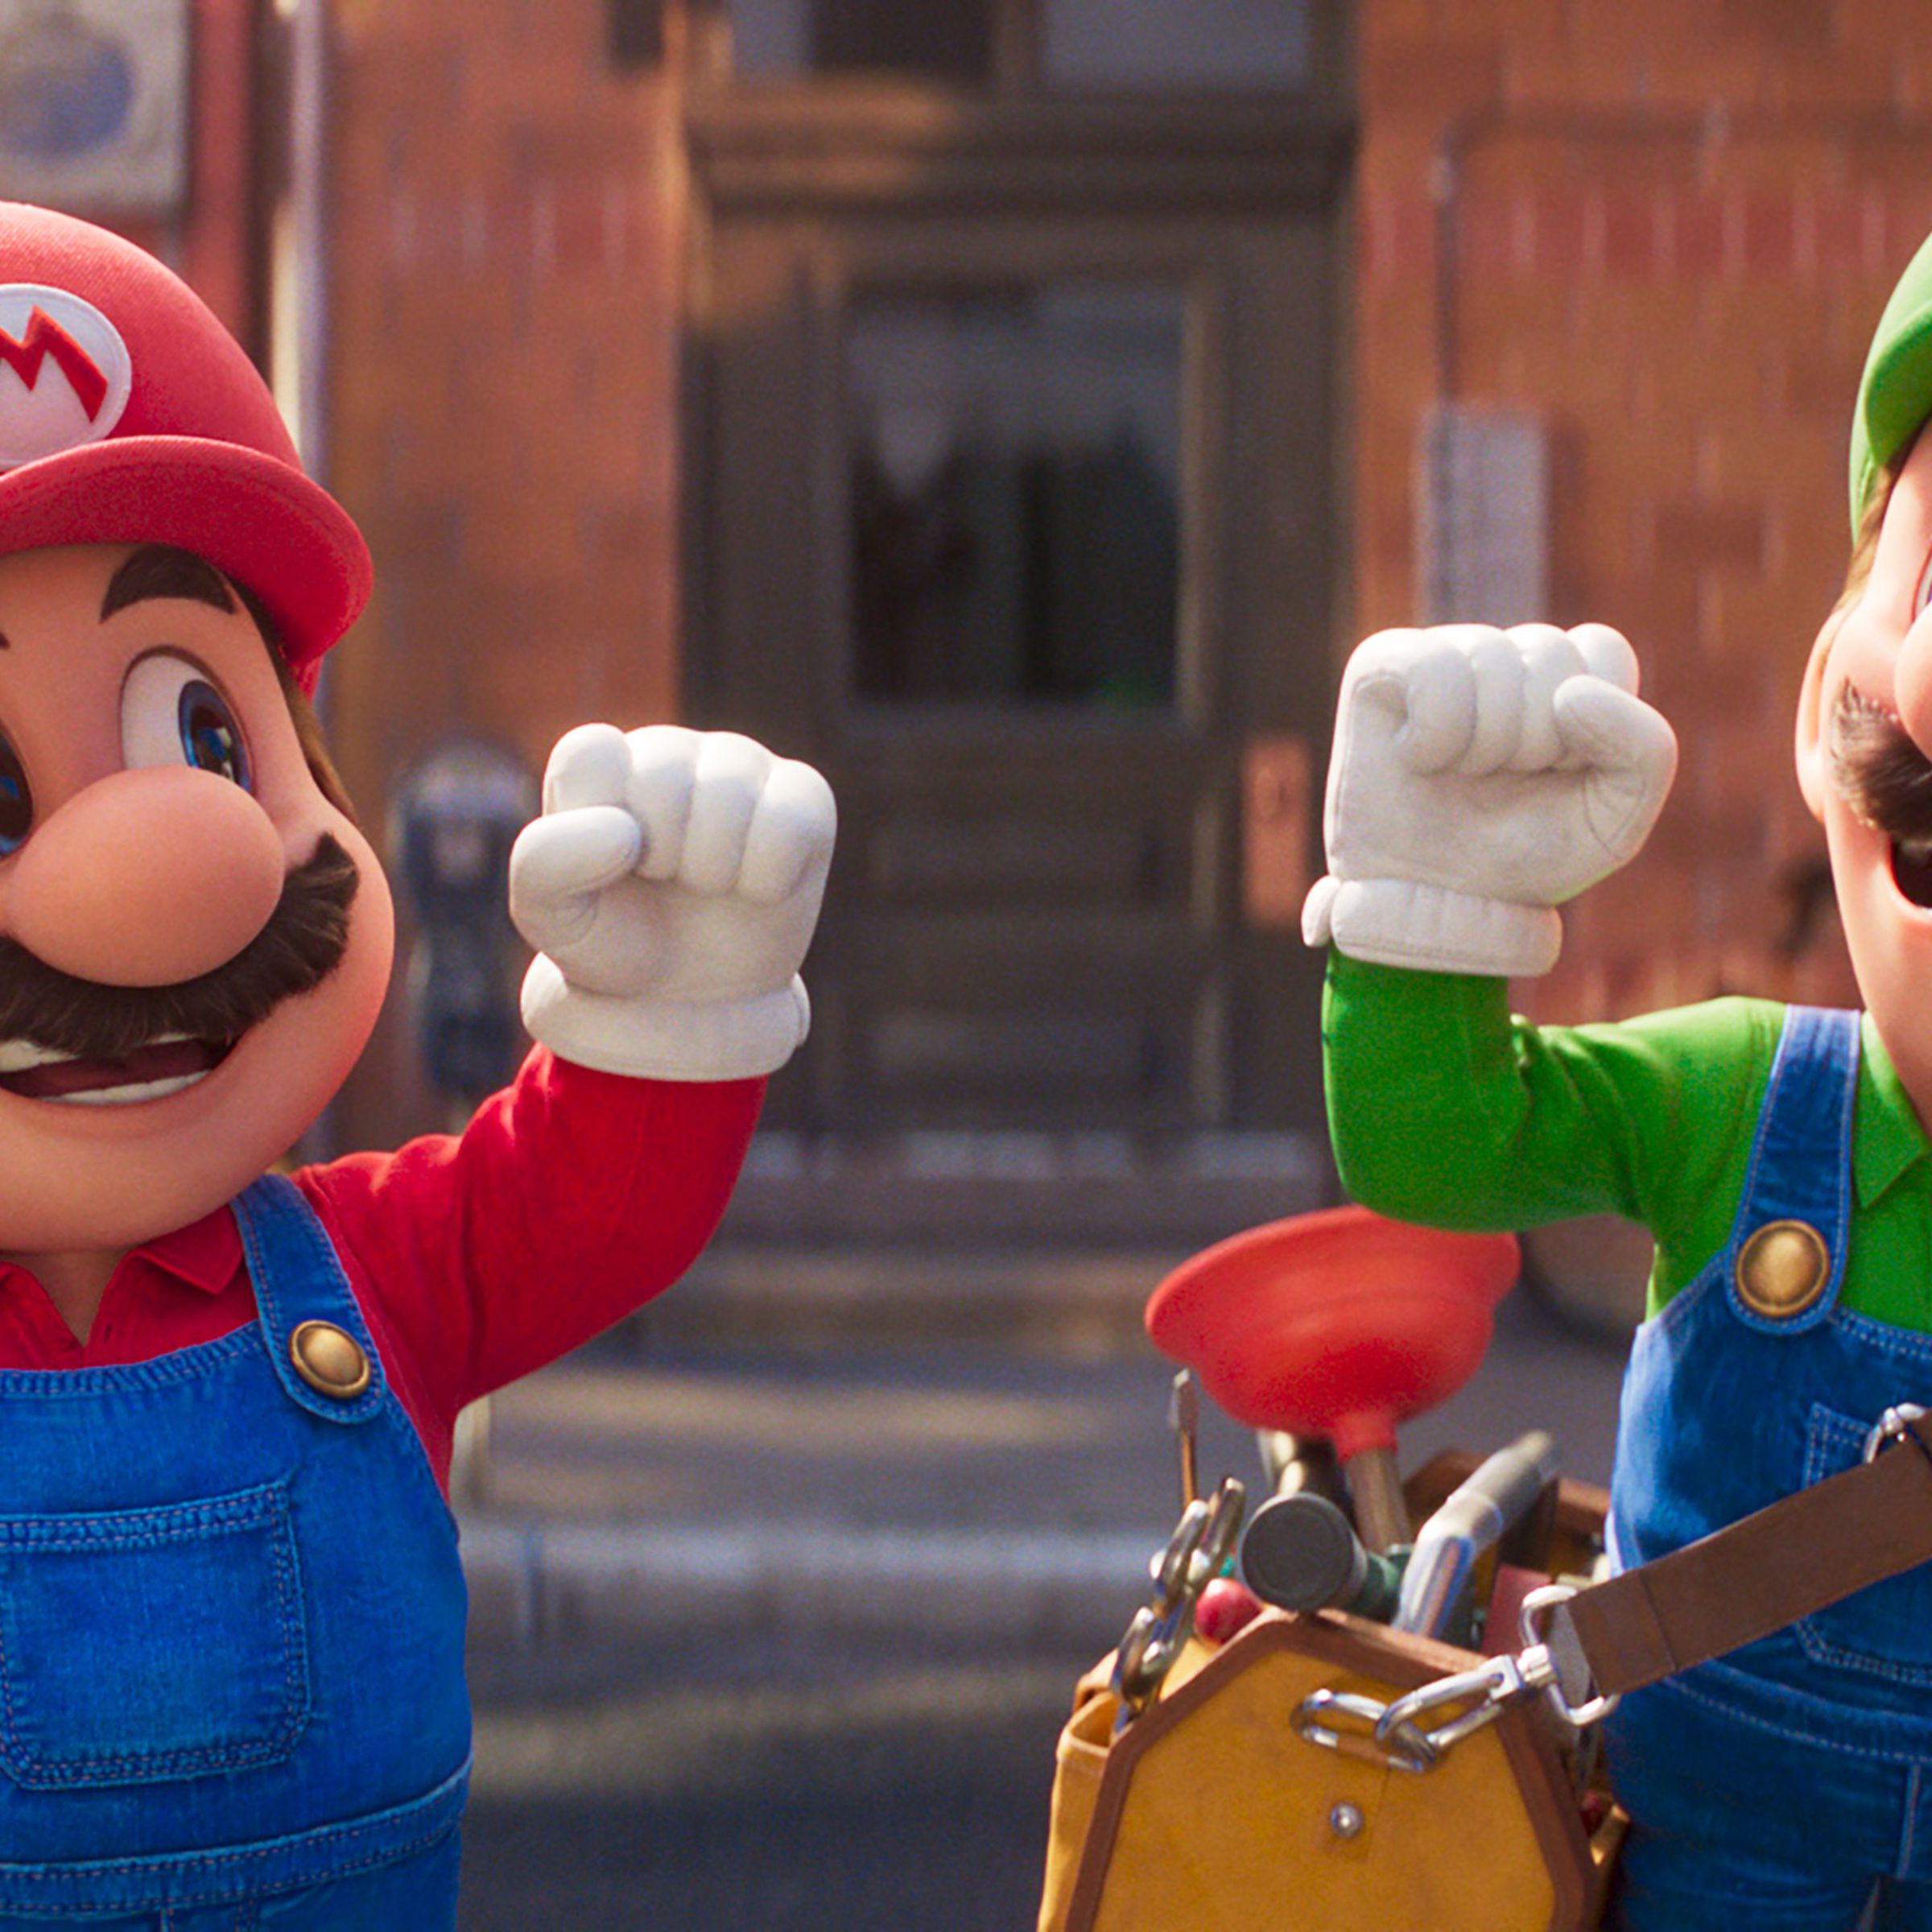 An image showing Mario and Luigi in The Super Mario Bros. Movie